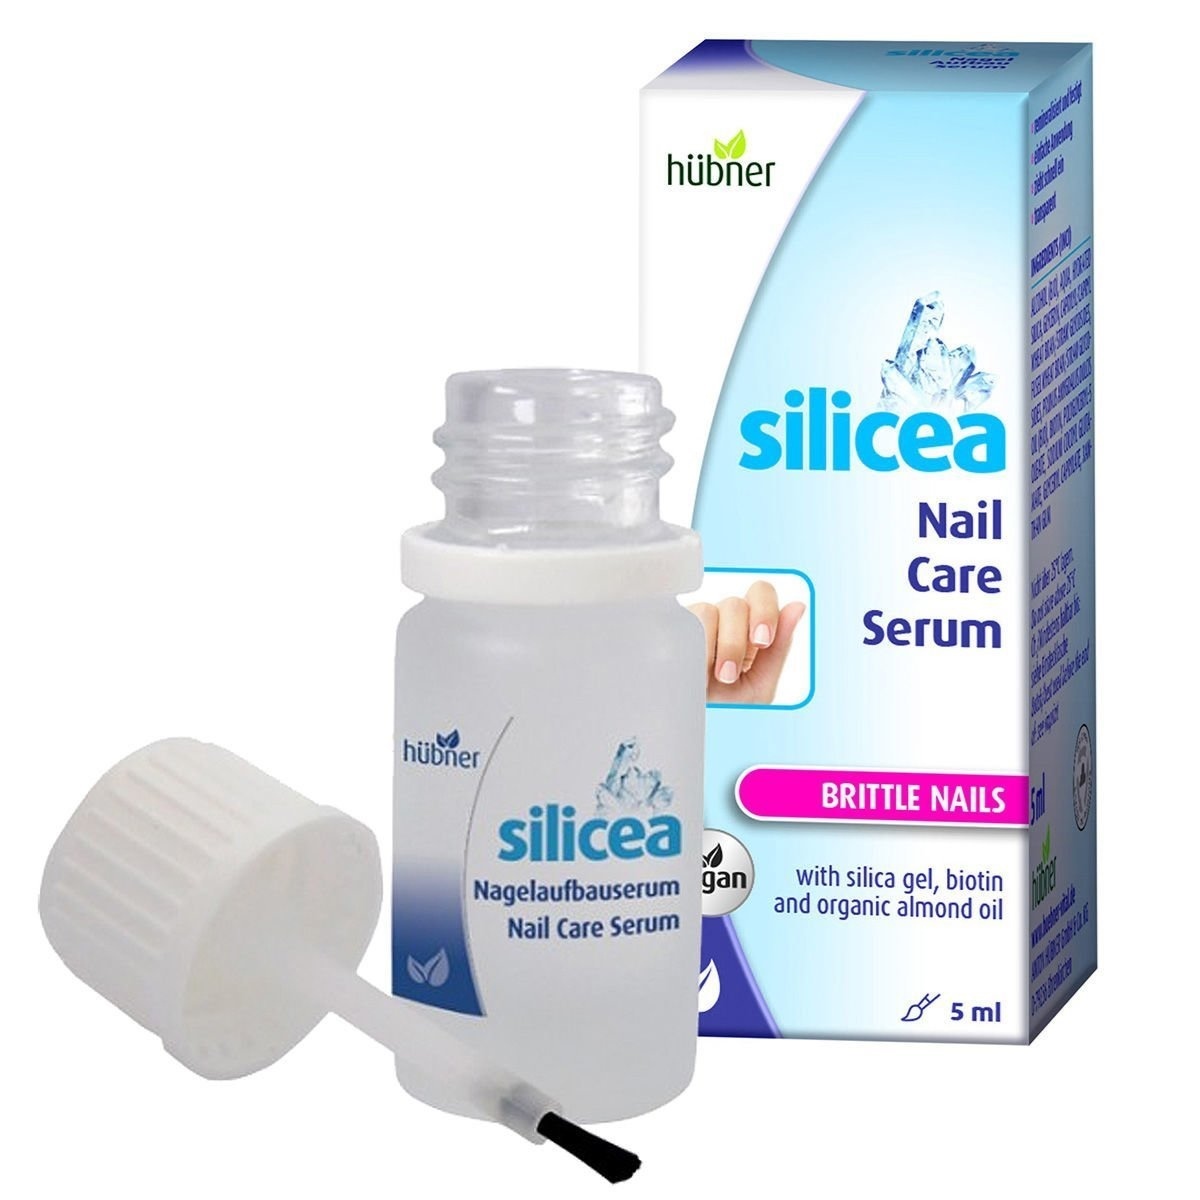 HUBNER Silicea Nail Care Serum PharmaDirect.gr